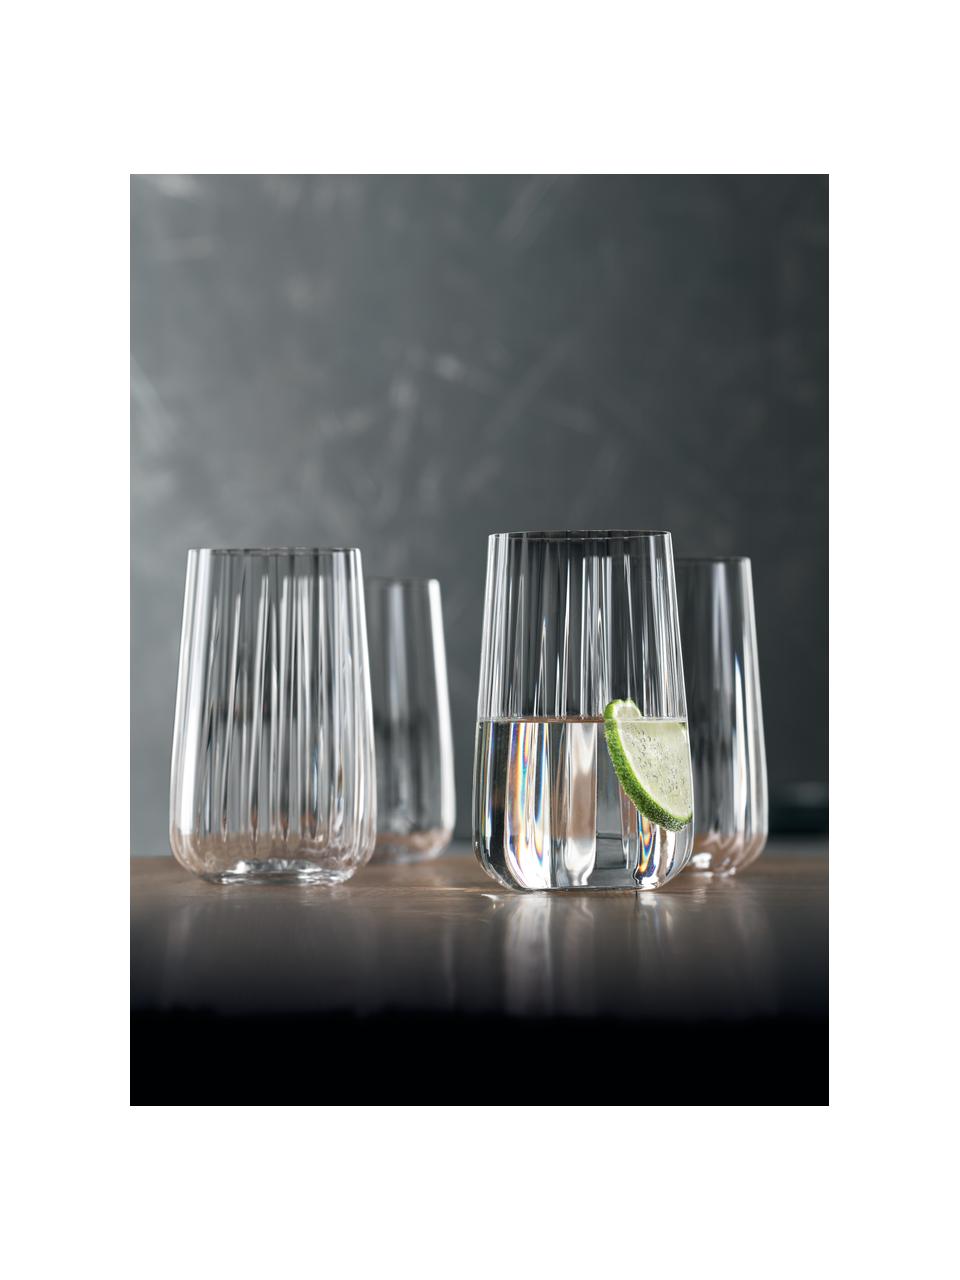 Kristall-Longdrinkgläser Life Style, 4 Stück, Kristallglas, Transparent, Ø 8 x H 13 cm, 510 ml